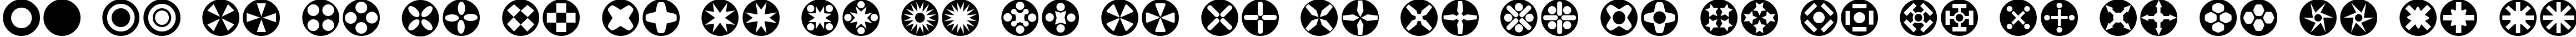 Пример написания английского алфавита шрифтом Circle Things